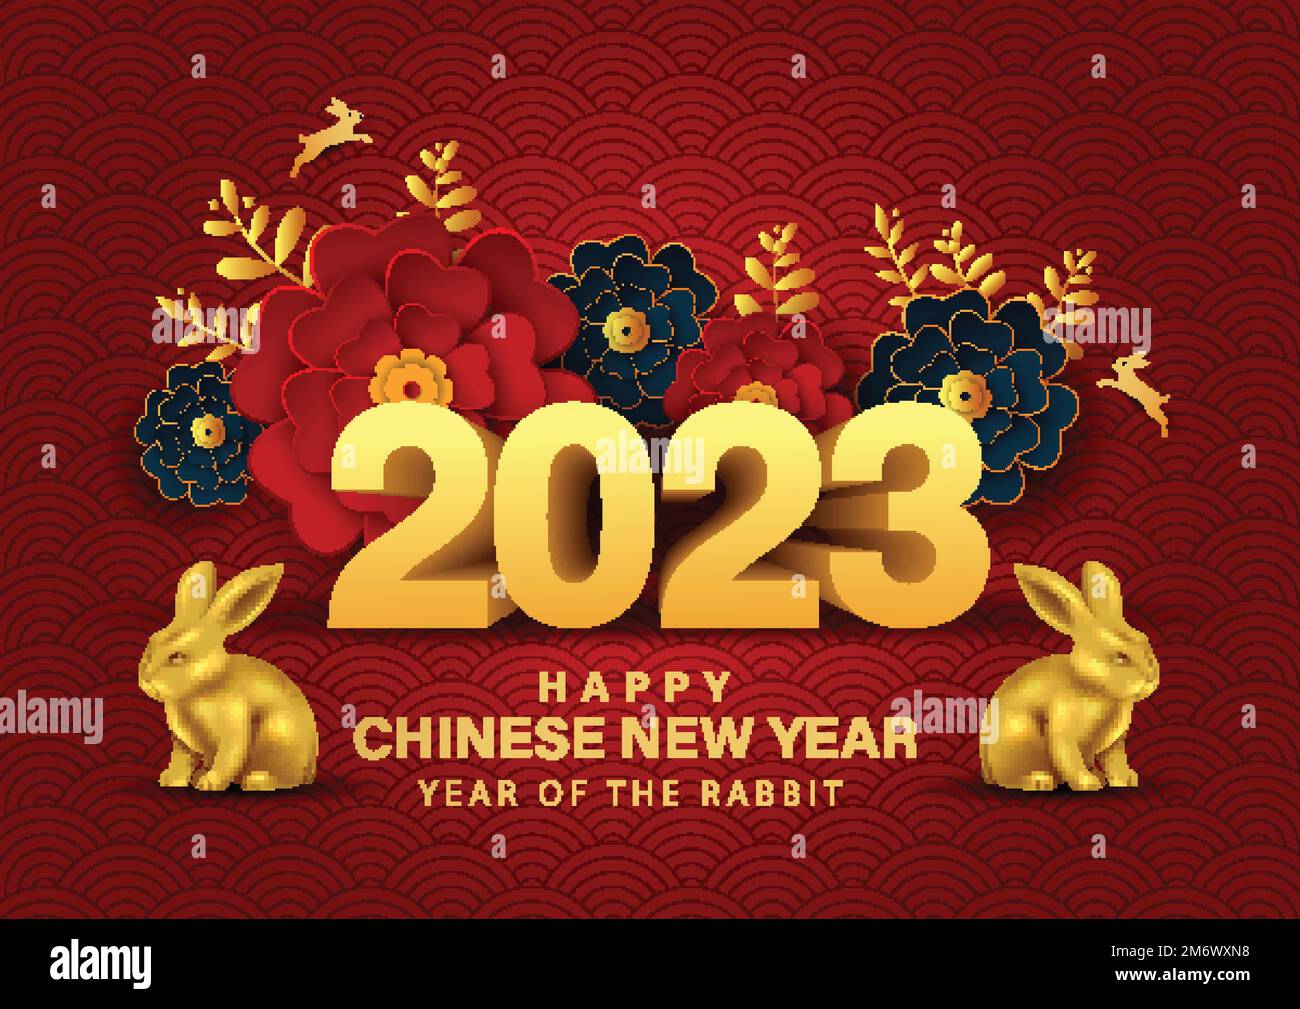 Happy Chinese Rabbit New Year 2023 Greeting Card Stock Photo - Alamy